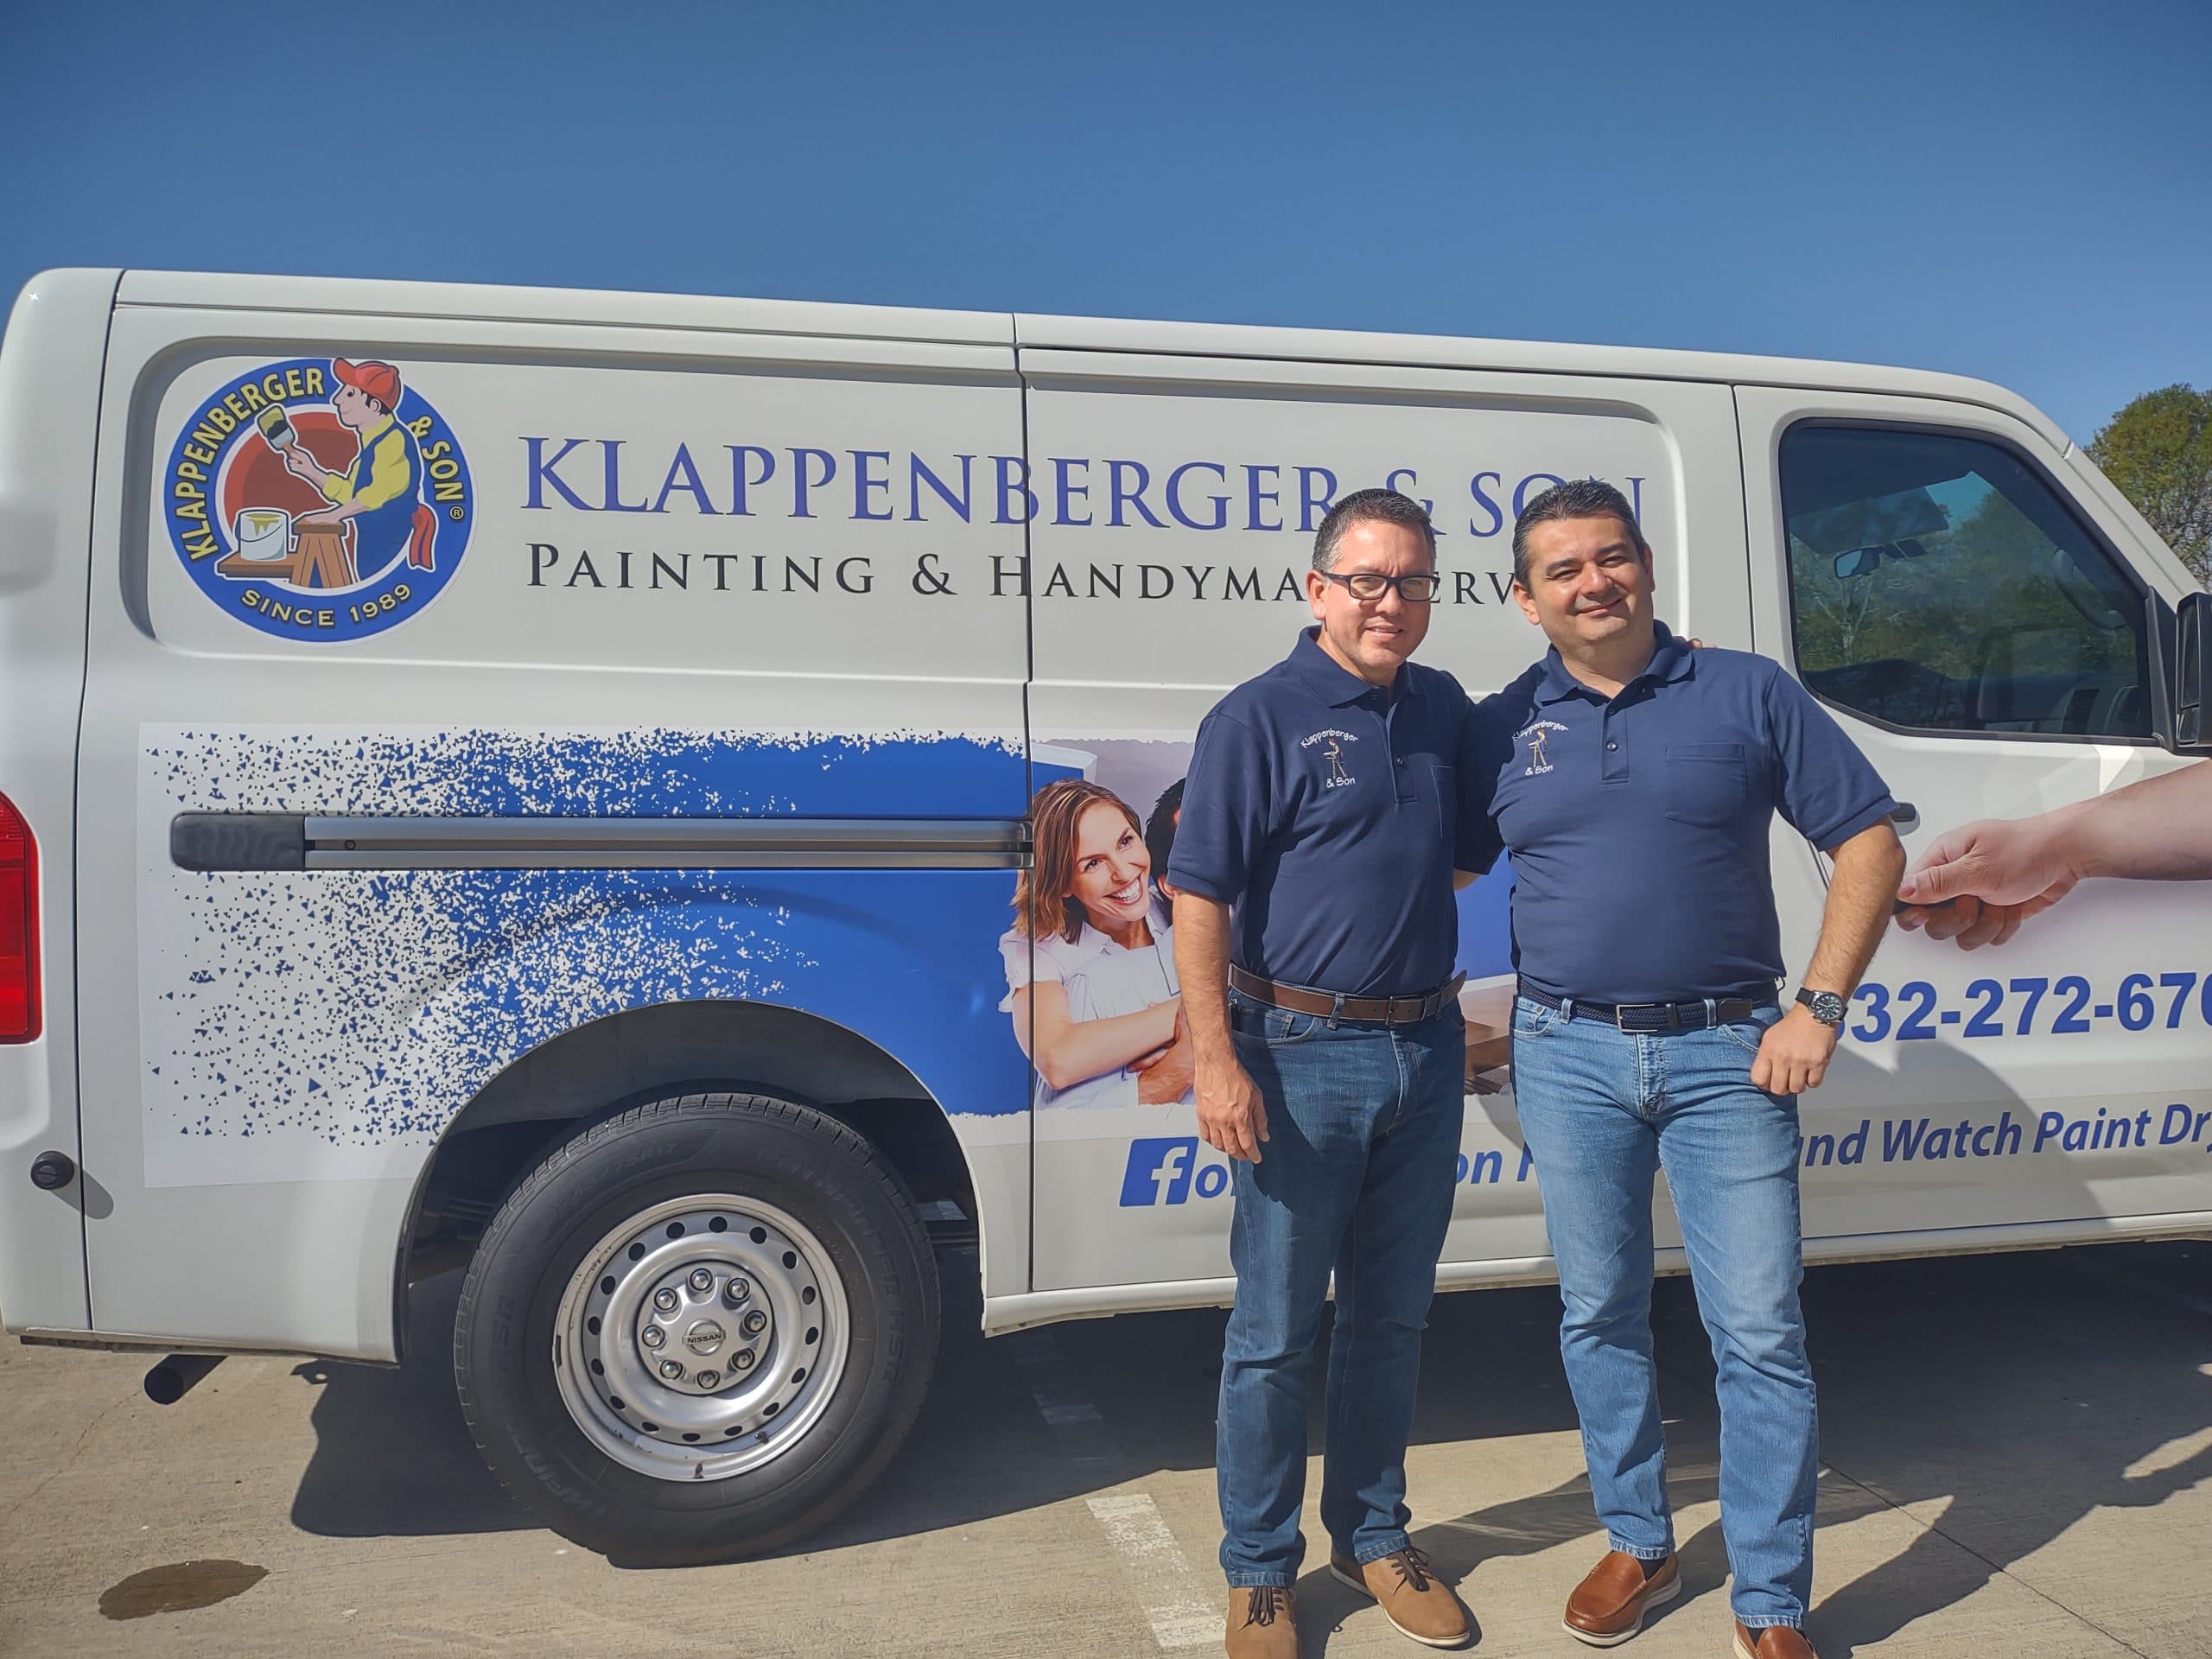 klappenberger & Son Franchise in Houston TX